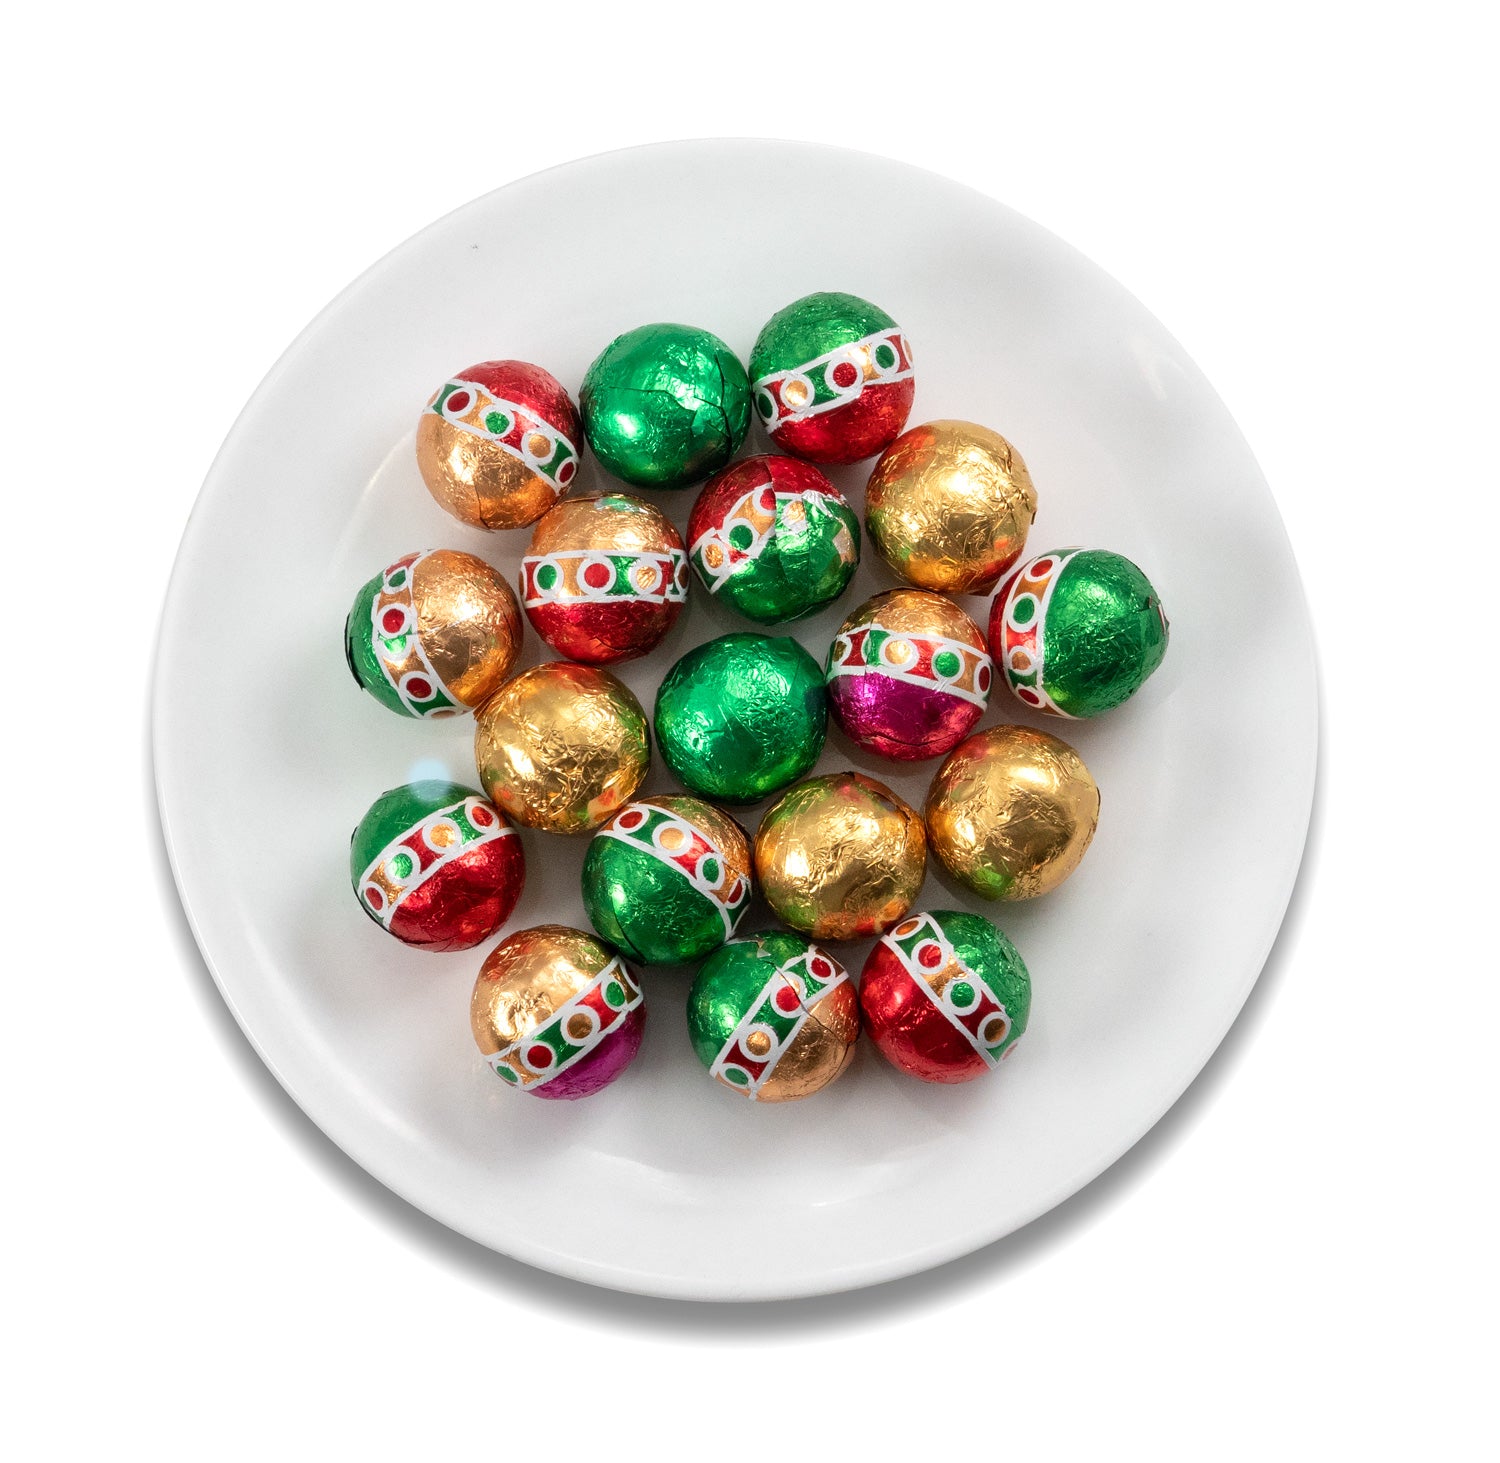 Milk chocolate foil-wrapped Christmas balls